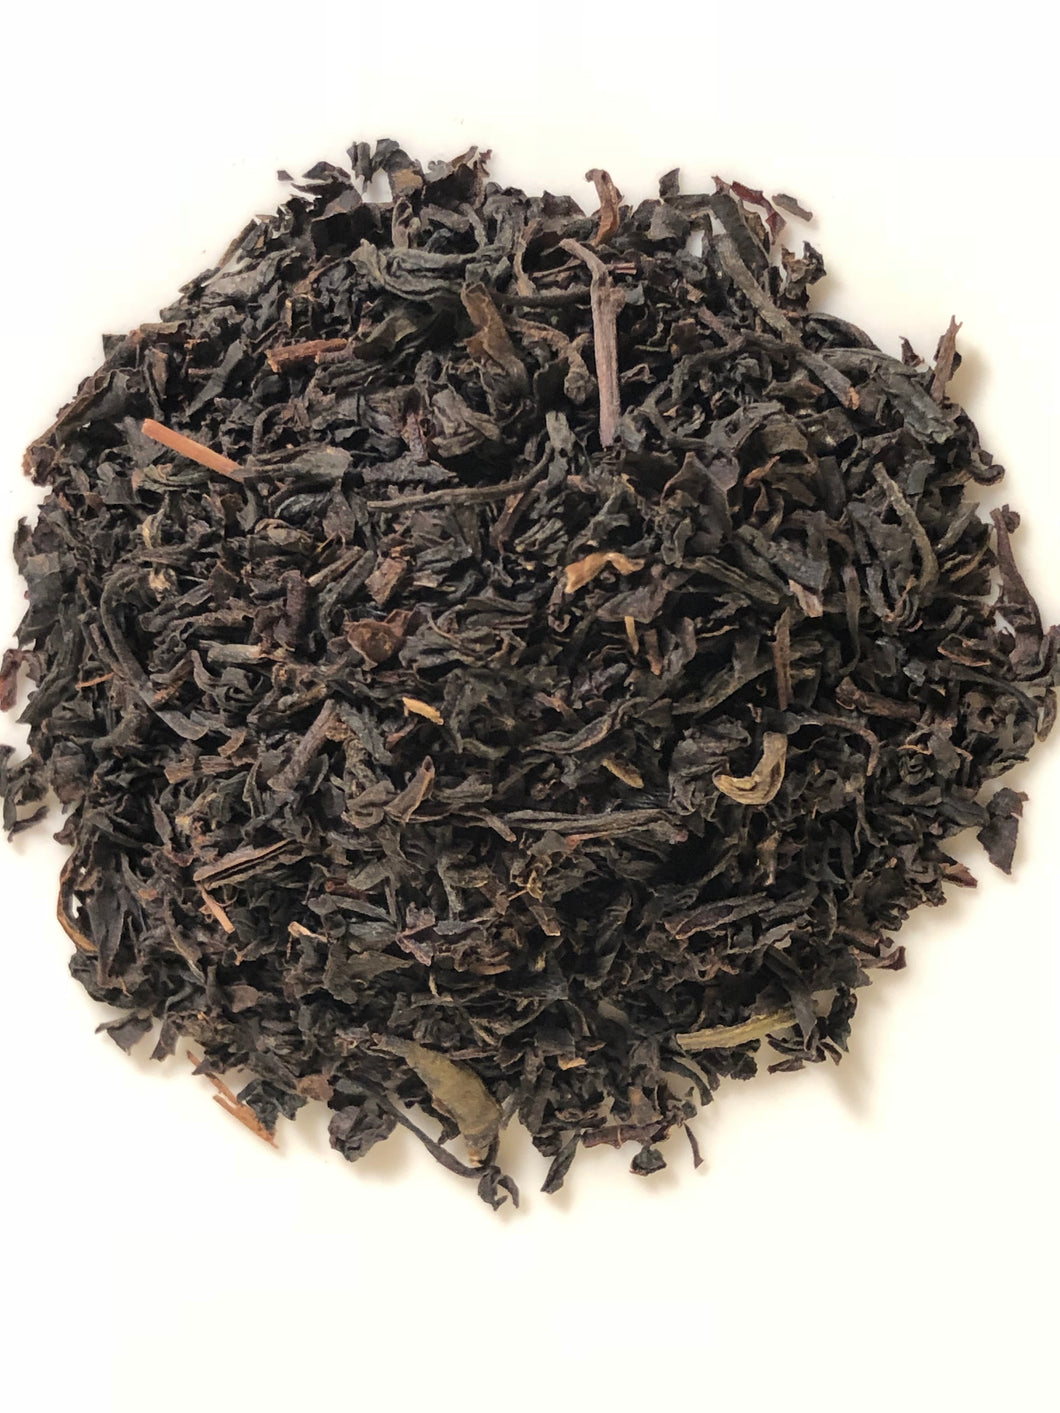 Organic Monk's Black Tea Blend